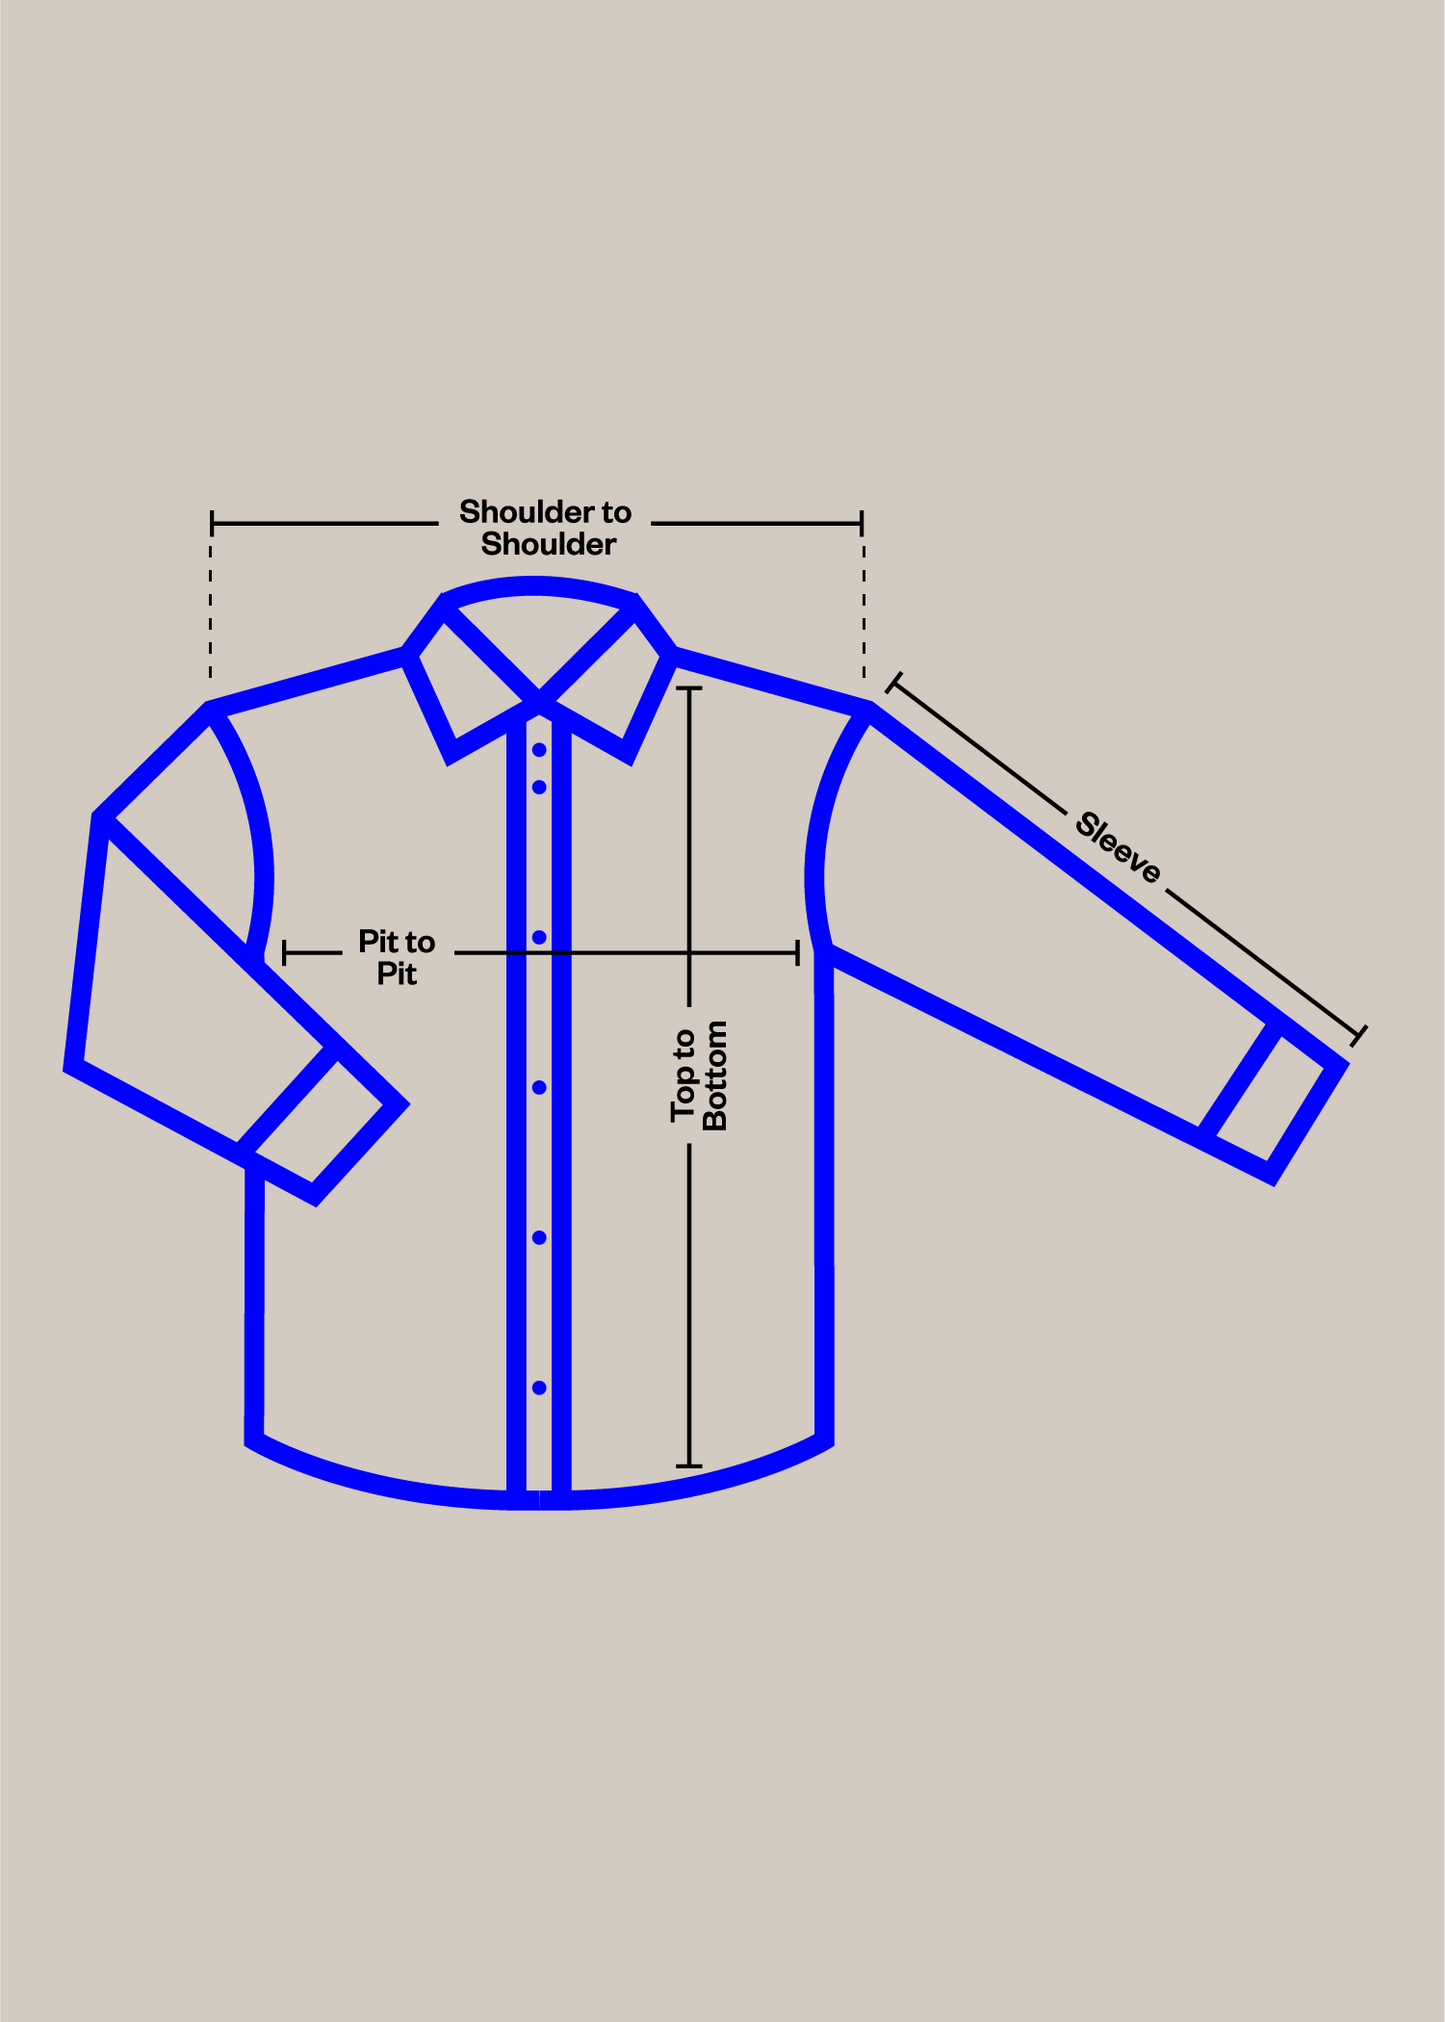 1970s Sears Perma-Prest Cotton Flannel Button Up Shirt Size M/L